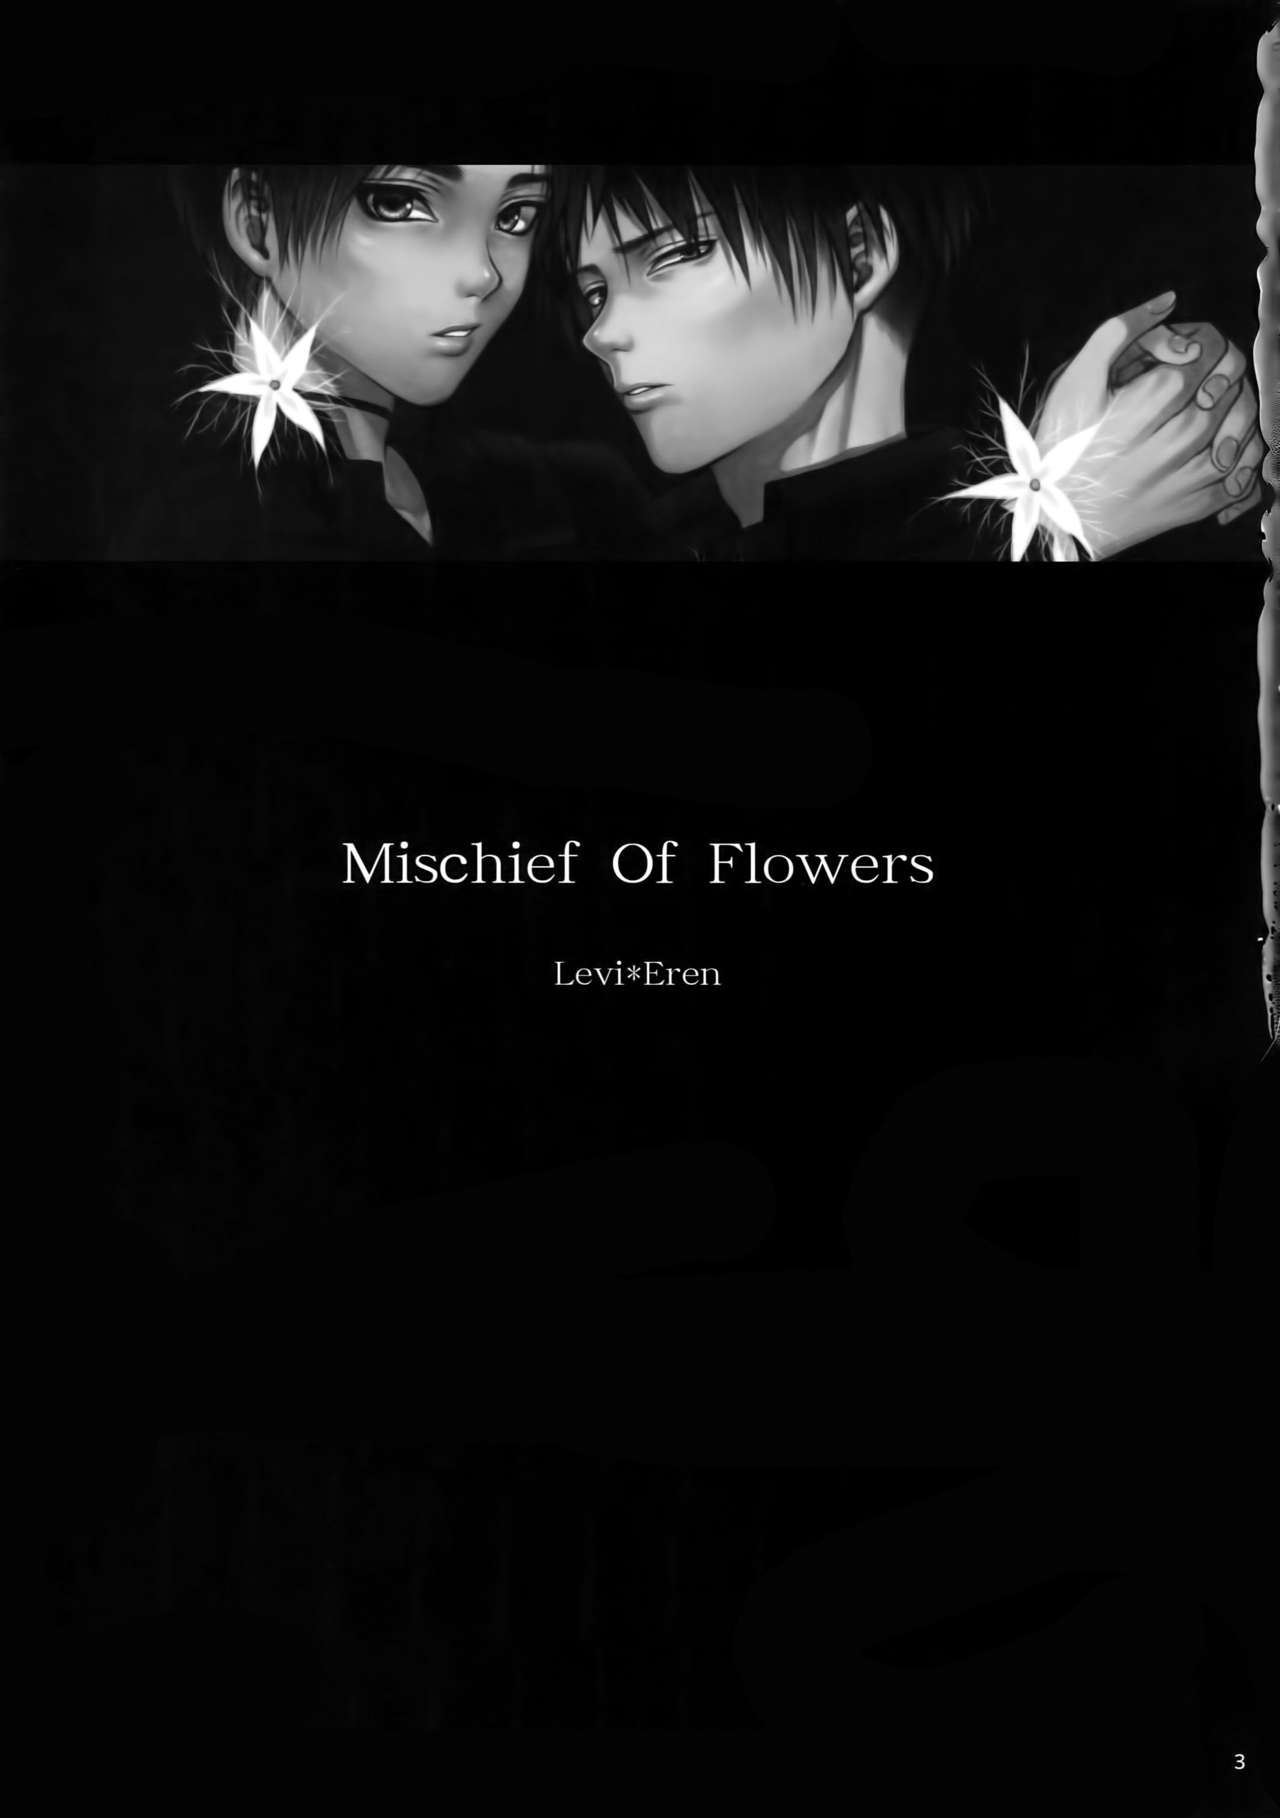 [Progress (奈月)] Mischief Of Flowers (進撃の巨人) [2015年8月13日]